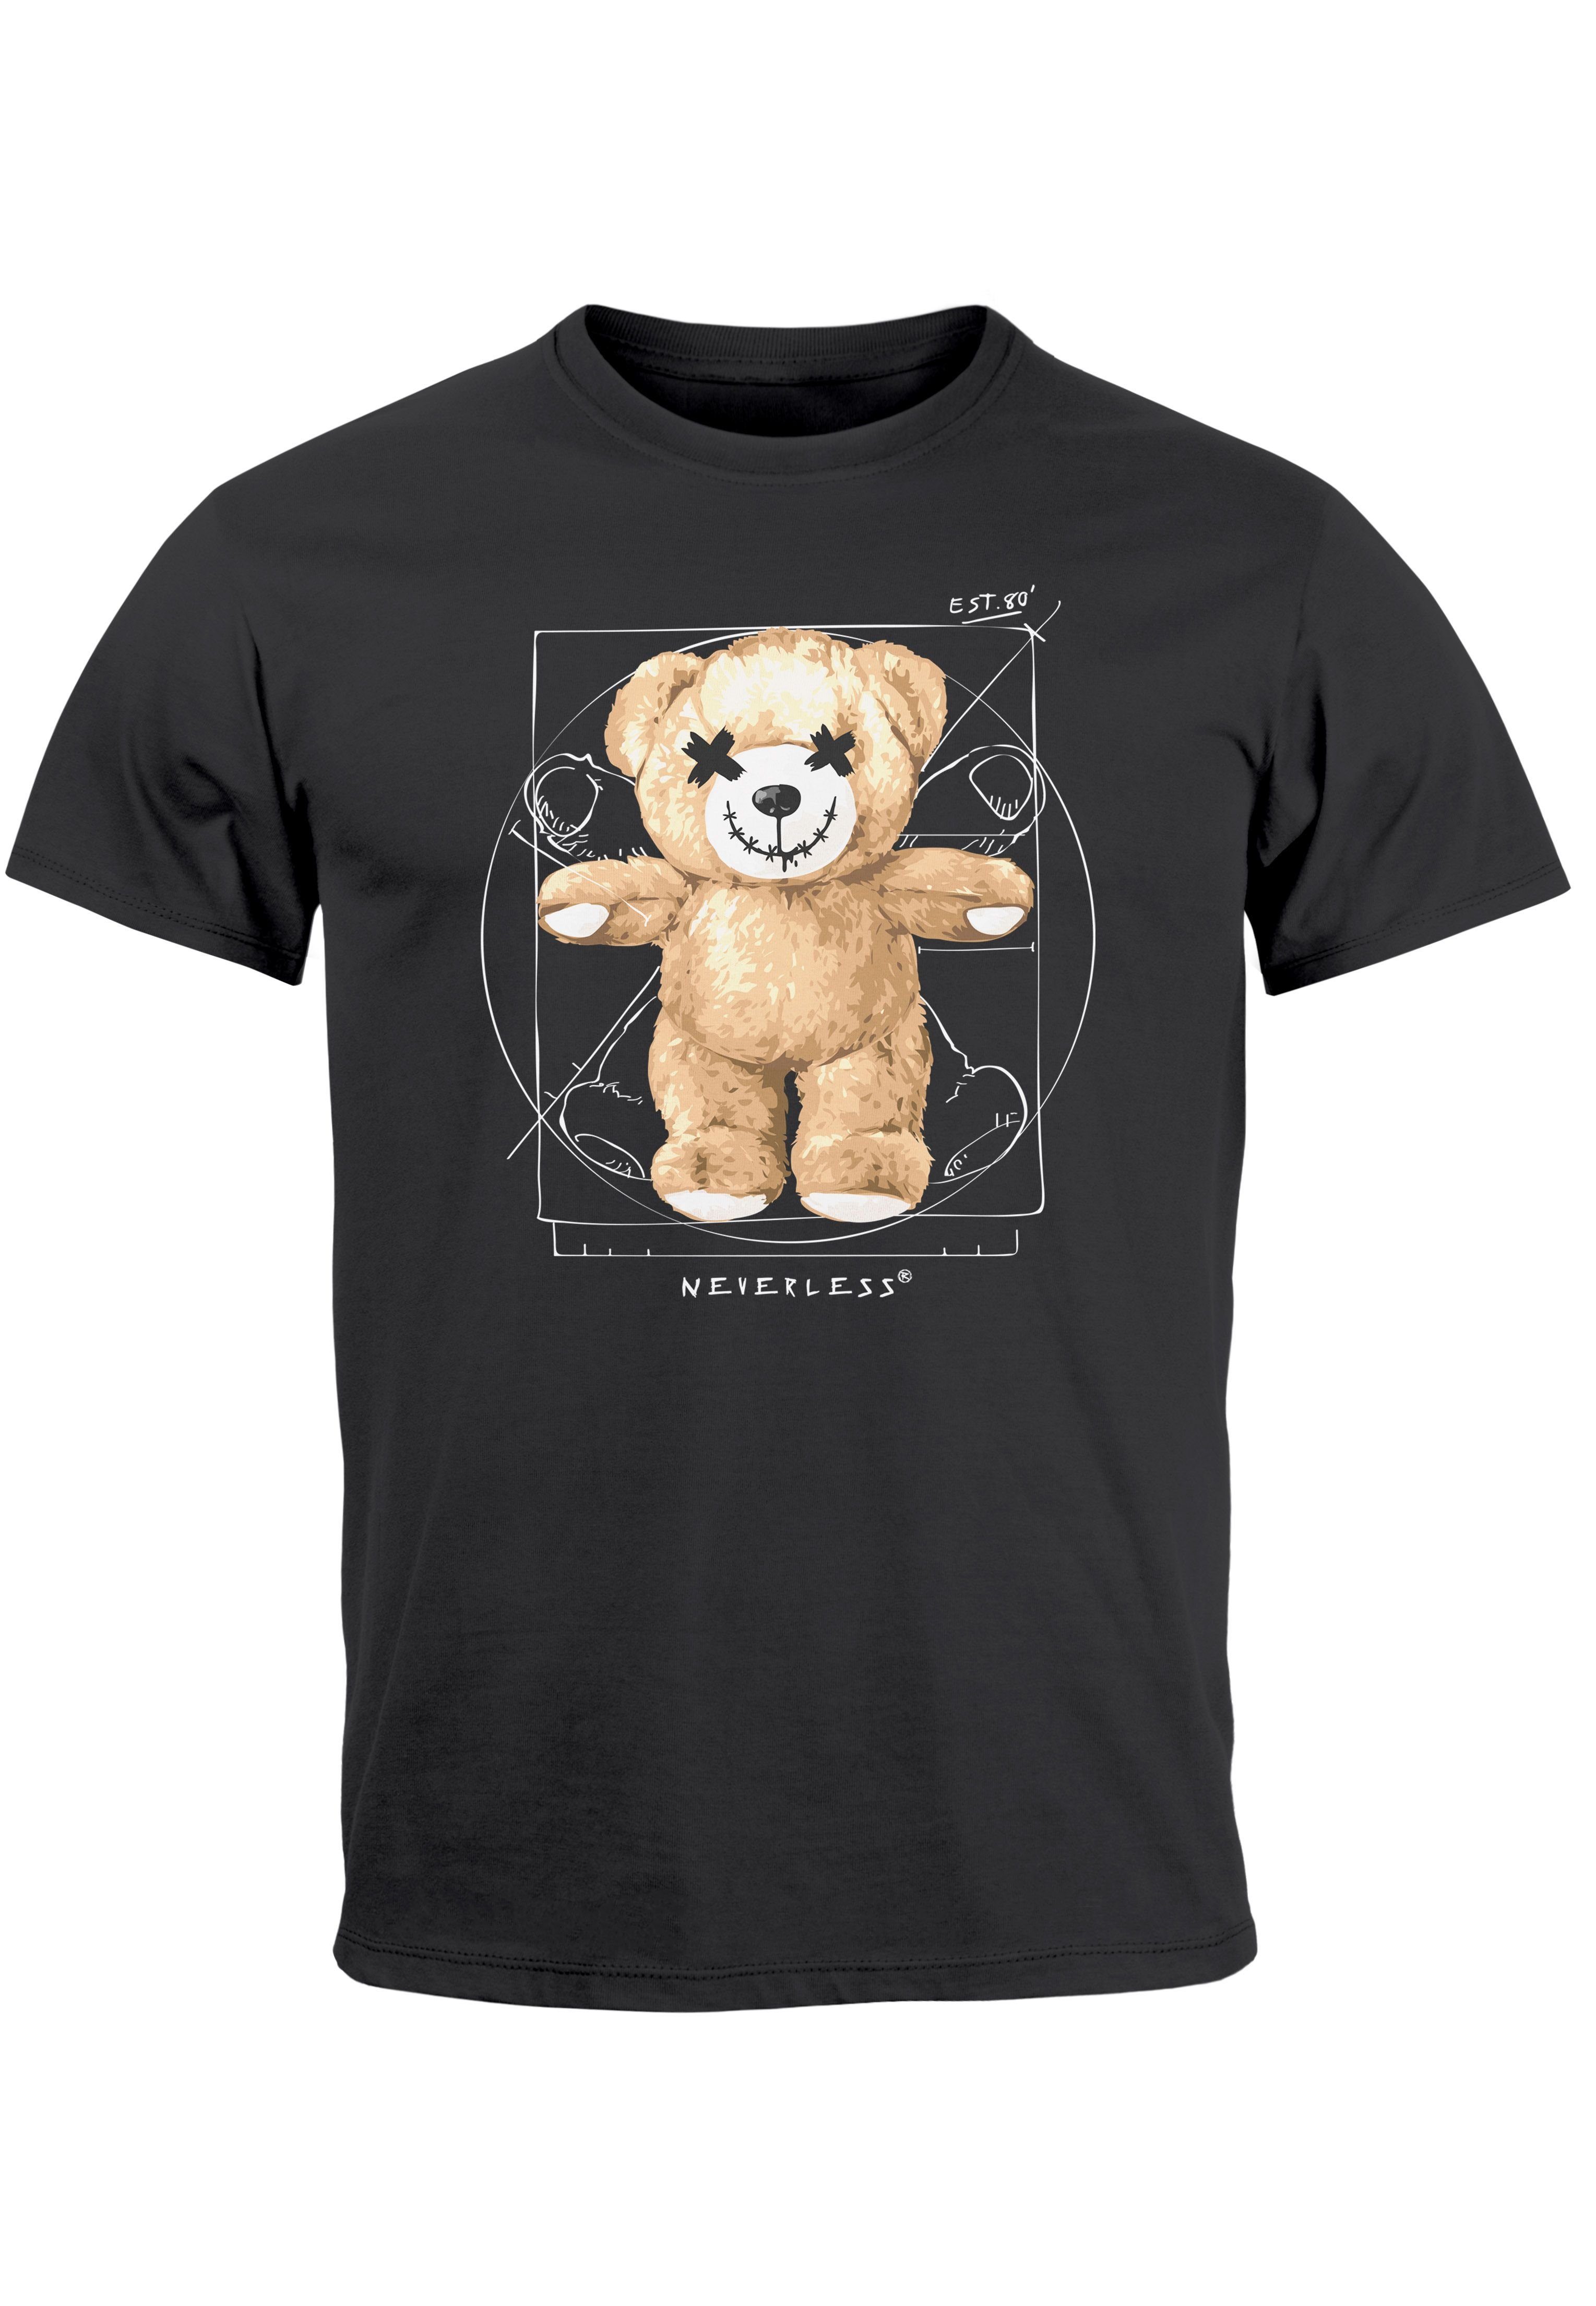 Neverless Print-Shirt Herren T-Shirt Print Teddy Bär DaVinci Meme Parodie Fashion Streetstyl mit Print dunkelgrau